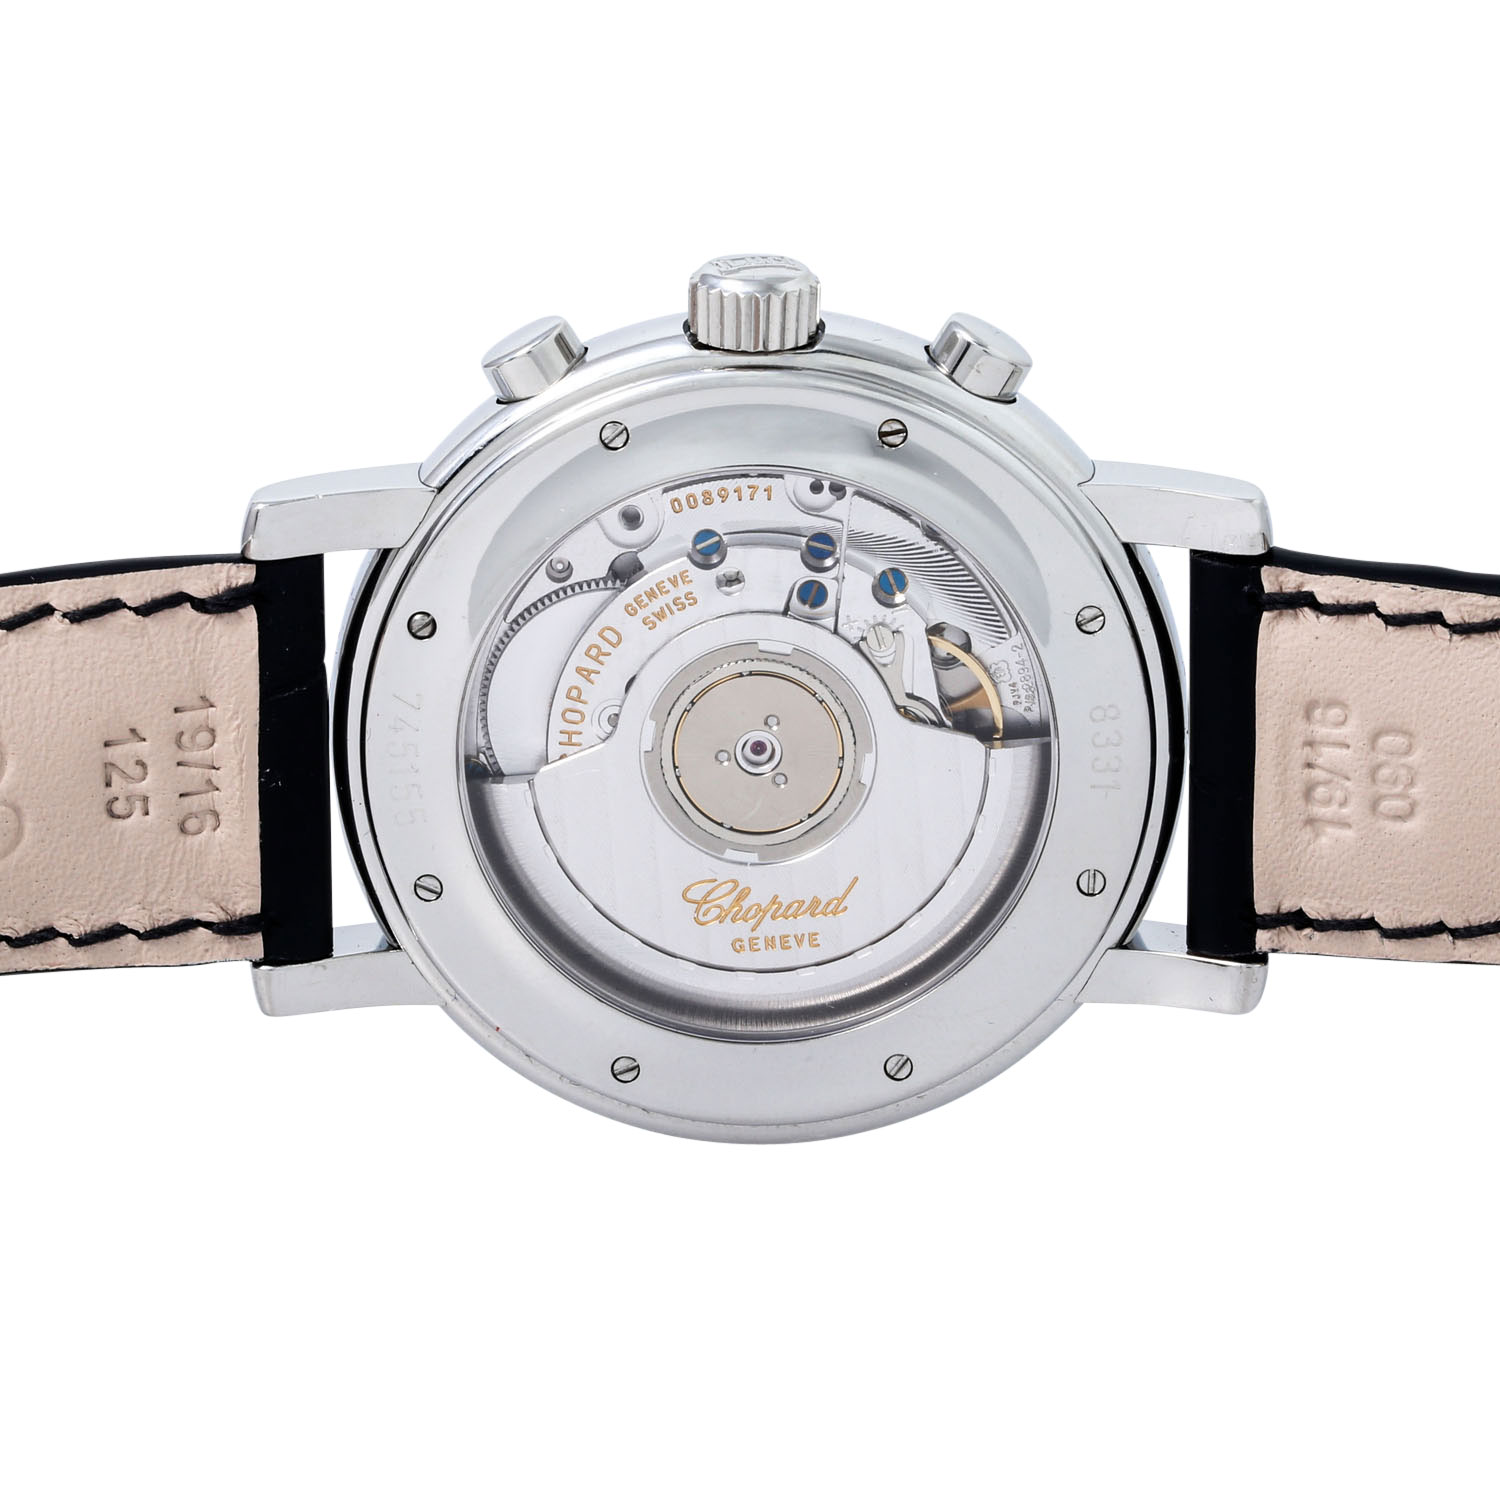 CHOPARD Mille Miglia Chronograph, Ref. 16/8331-3001. Armbanduhr. Ca. 2000er Jahre. - Image 2 of 9